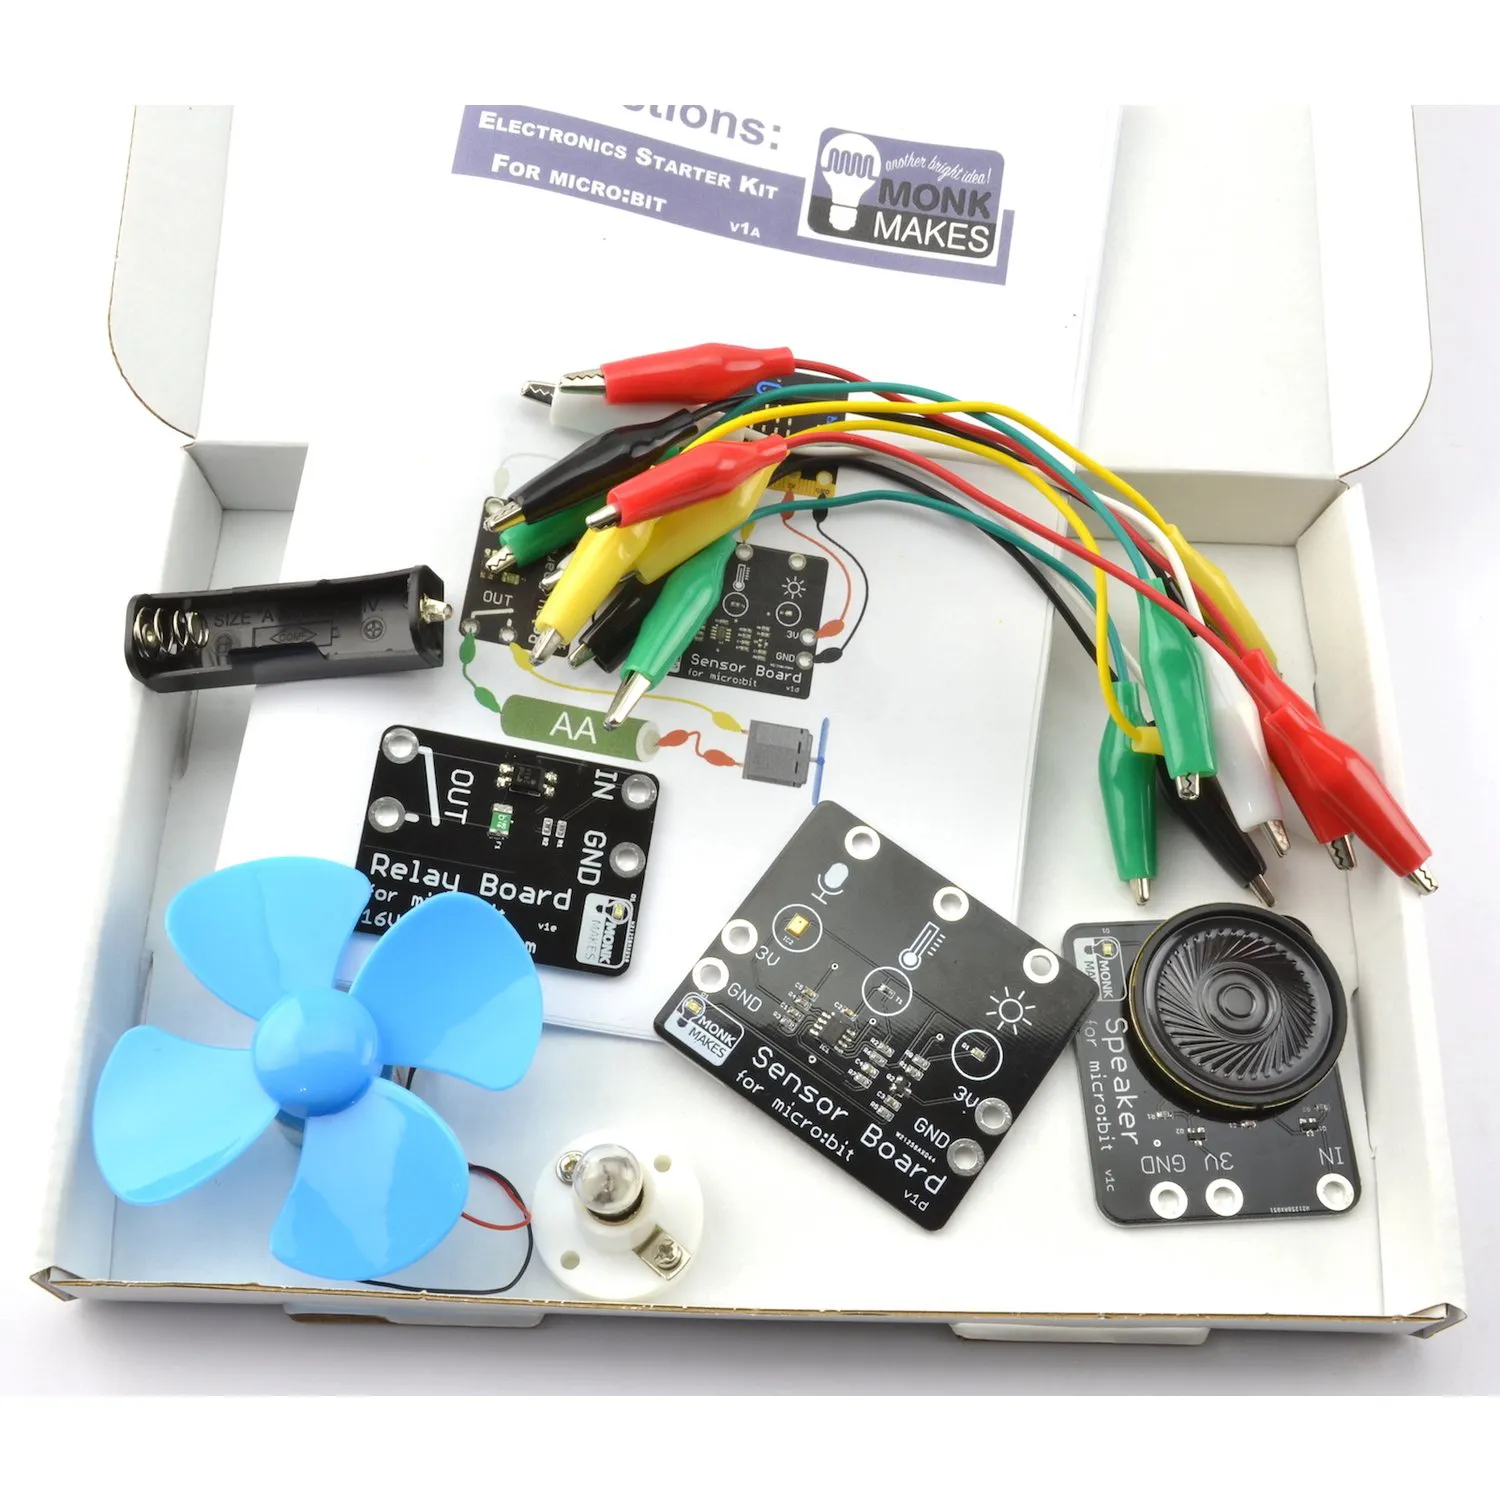 Photo of Electronics Starter Kit for Micro:bit